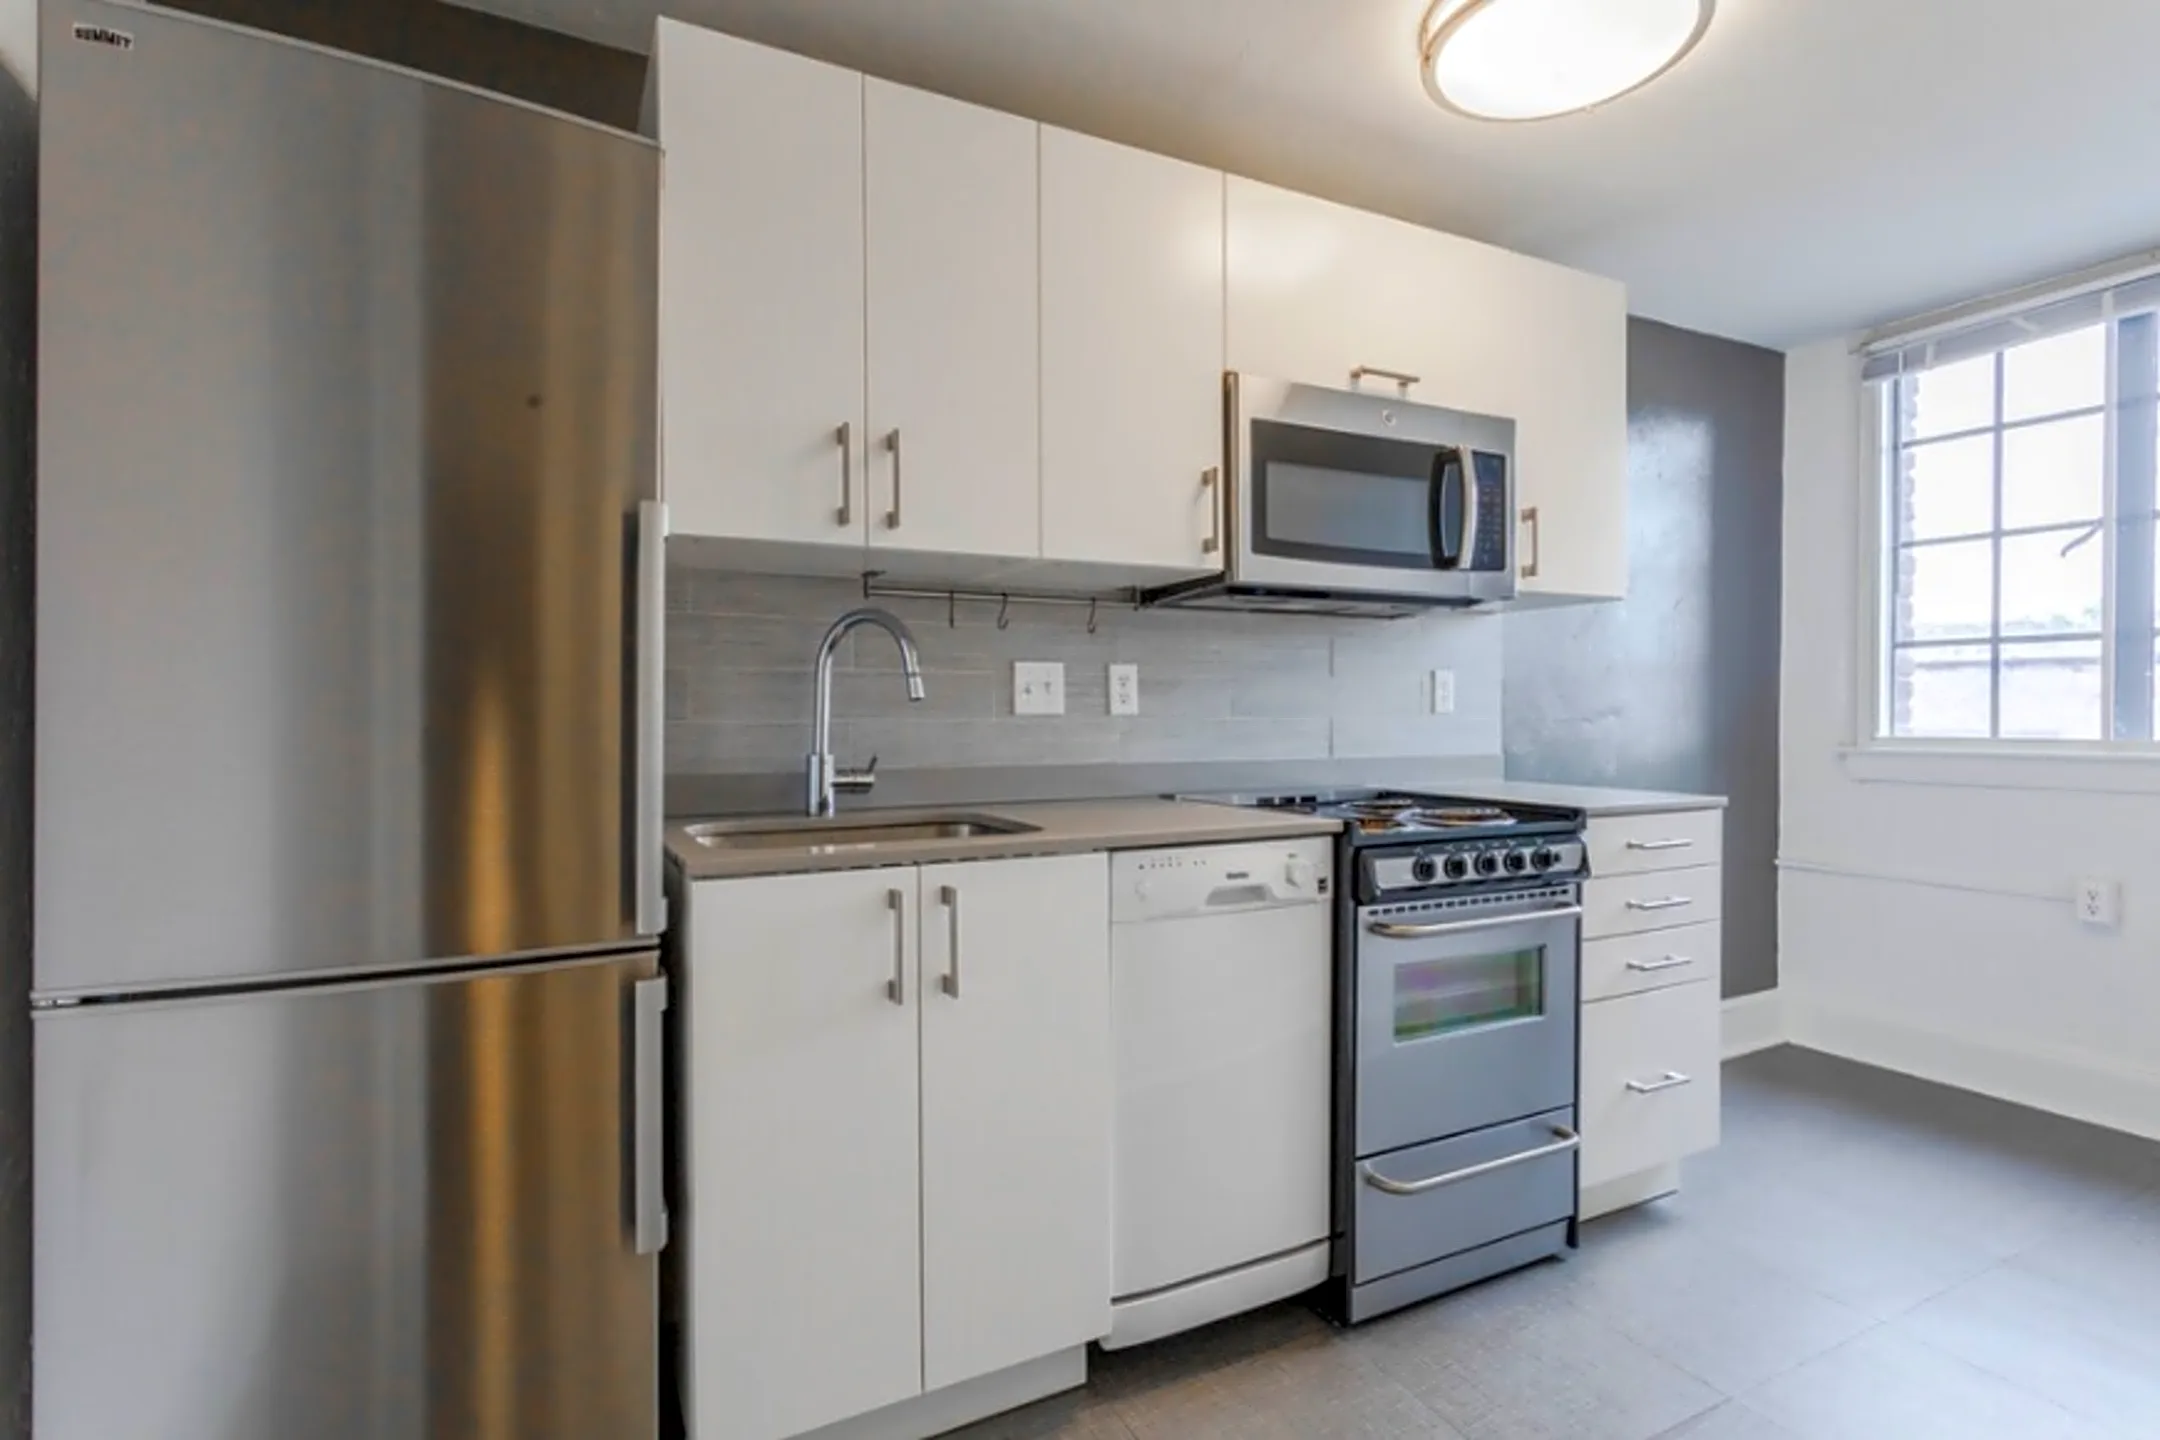 Kitchen - Cambridge Oxford Apartments - New Haven, CT